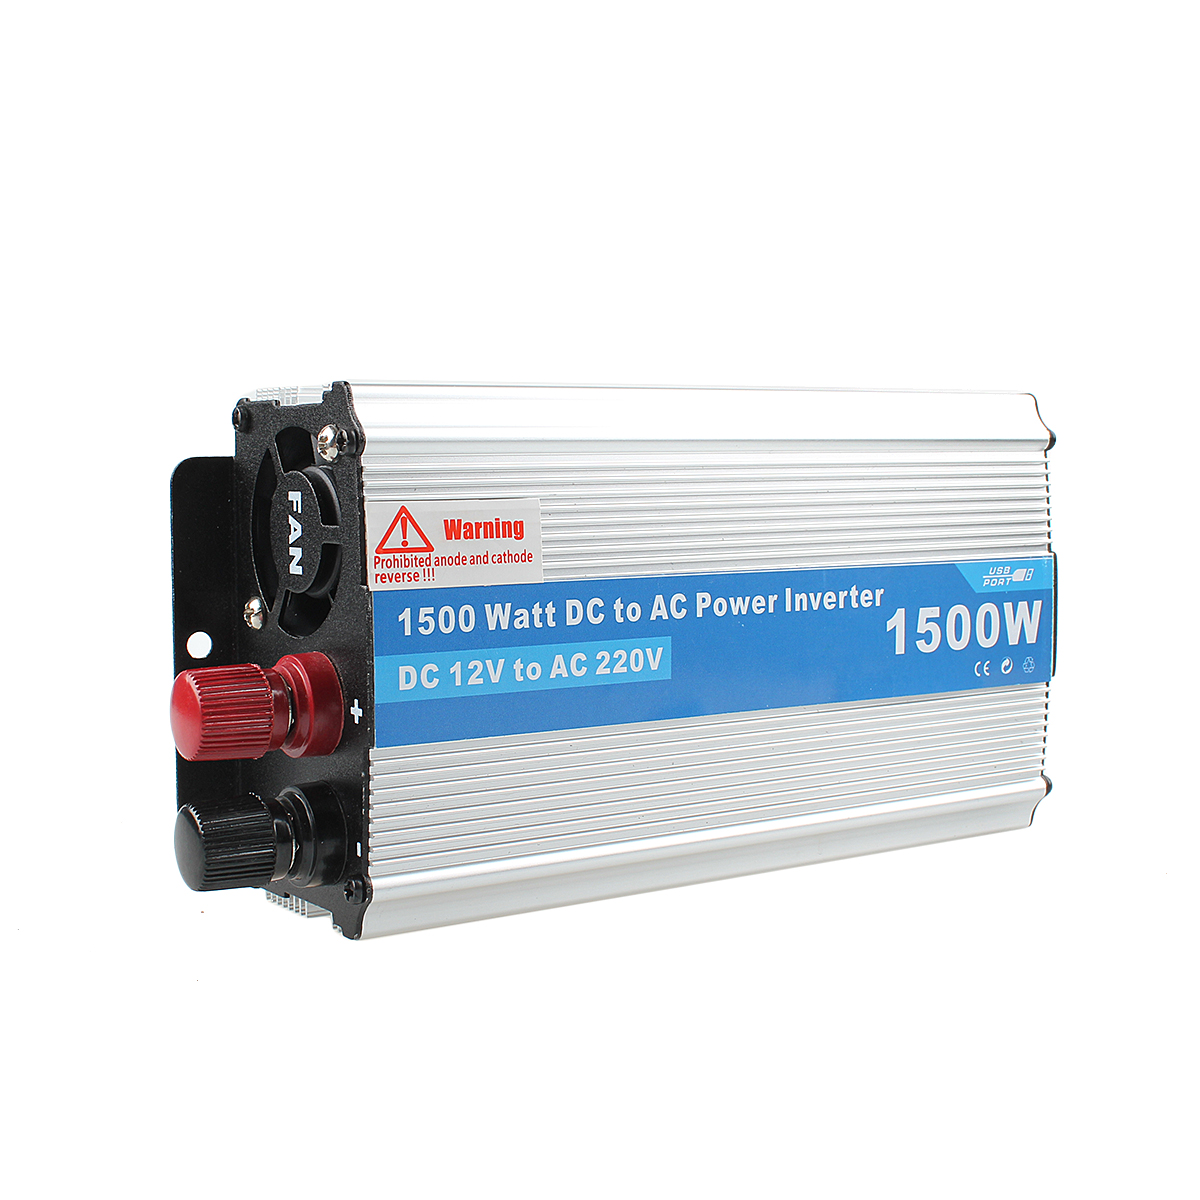 1500W Power Inverter